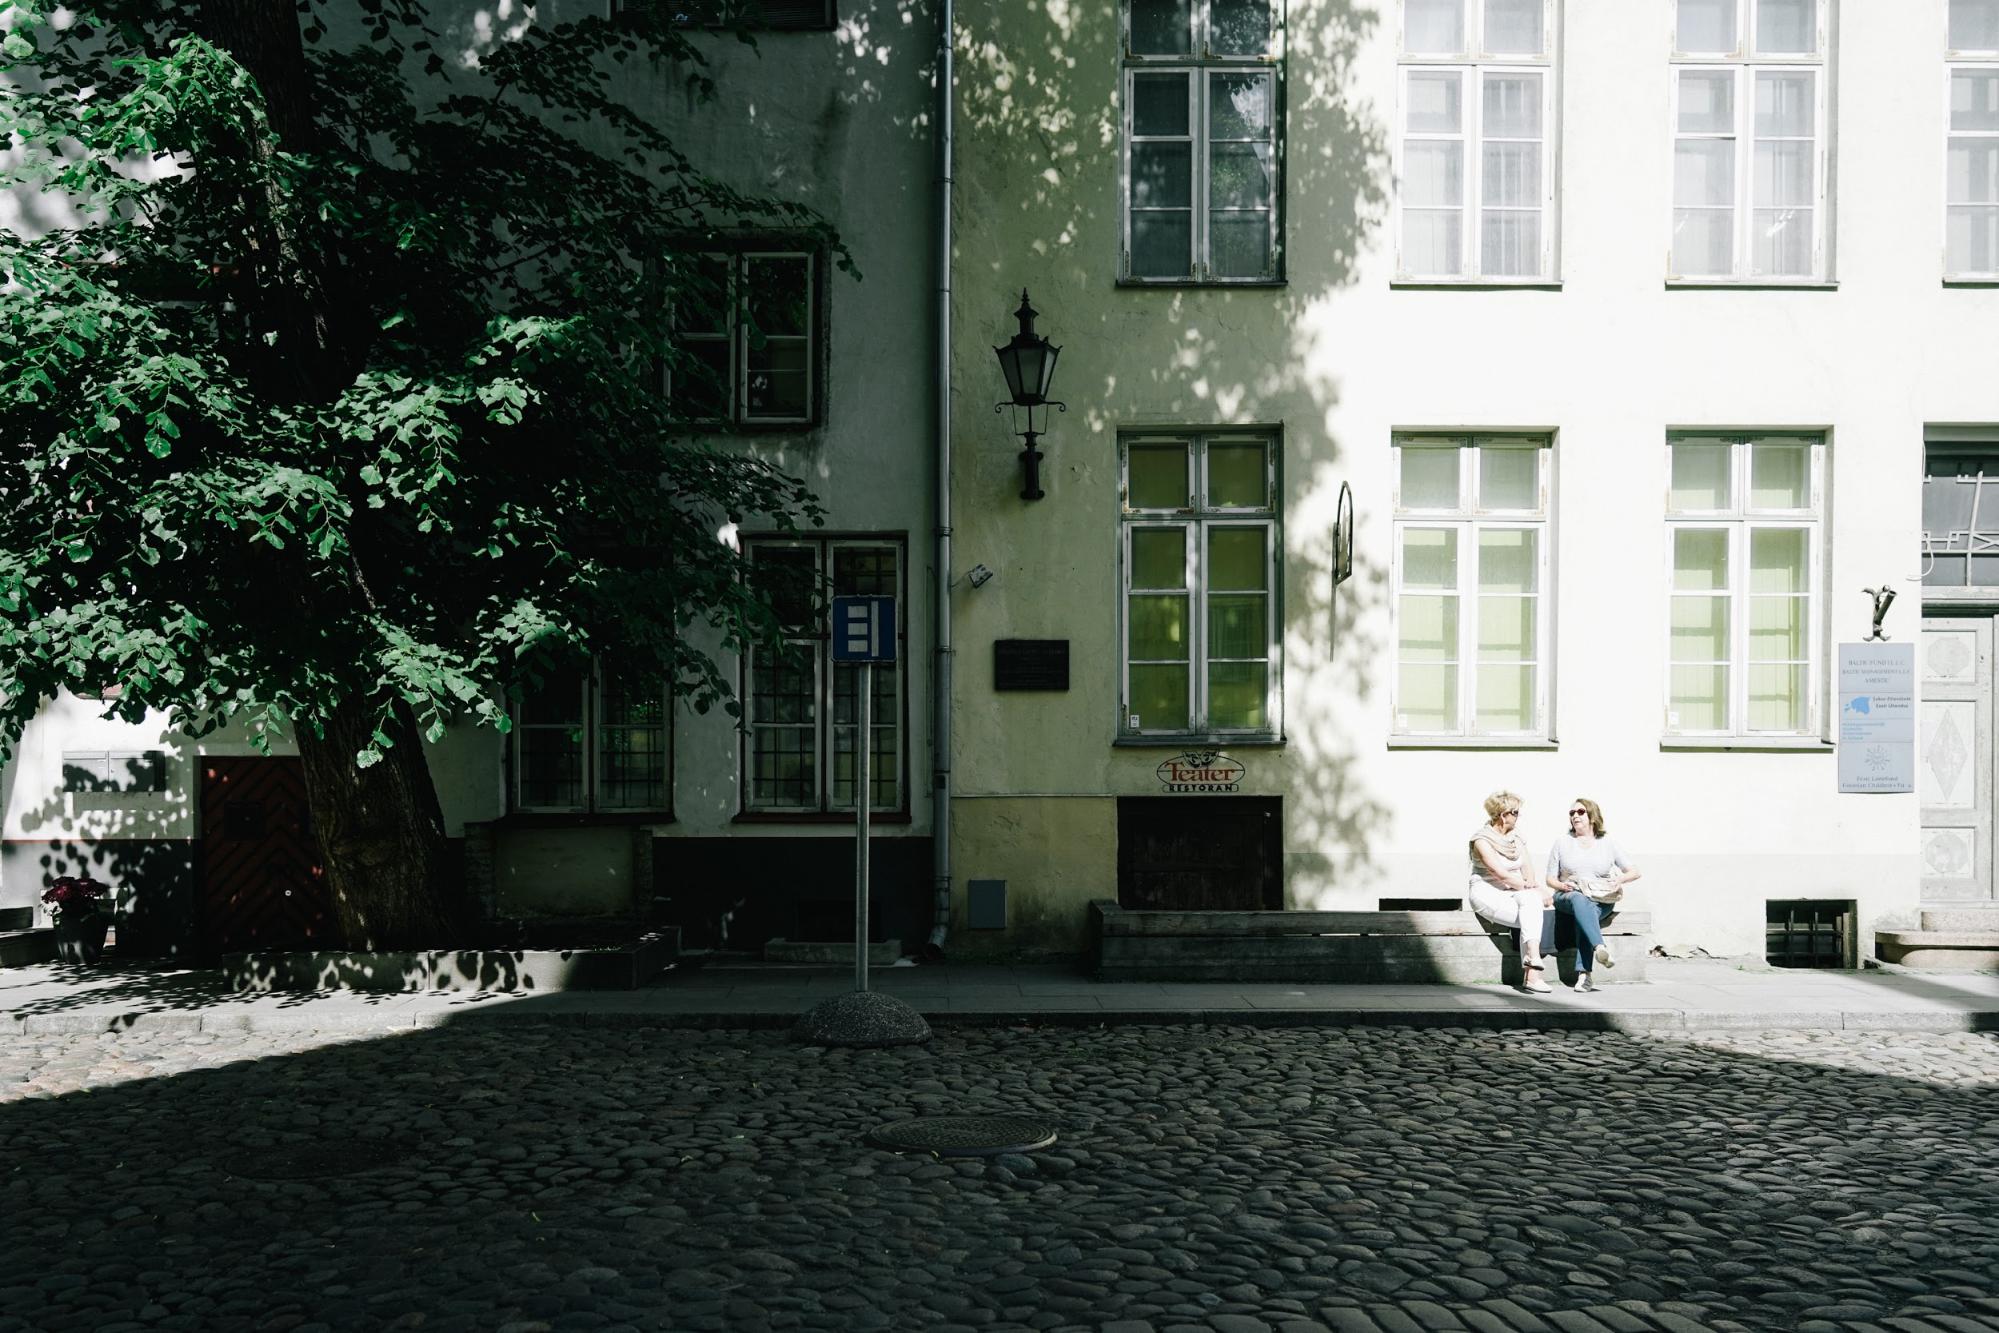 Gaku・PhotoTrip : エストニアの世界遺産 タリン旧市街